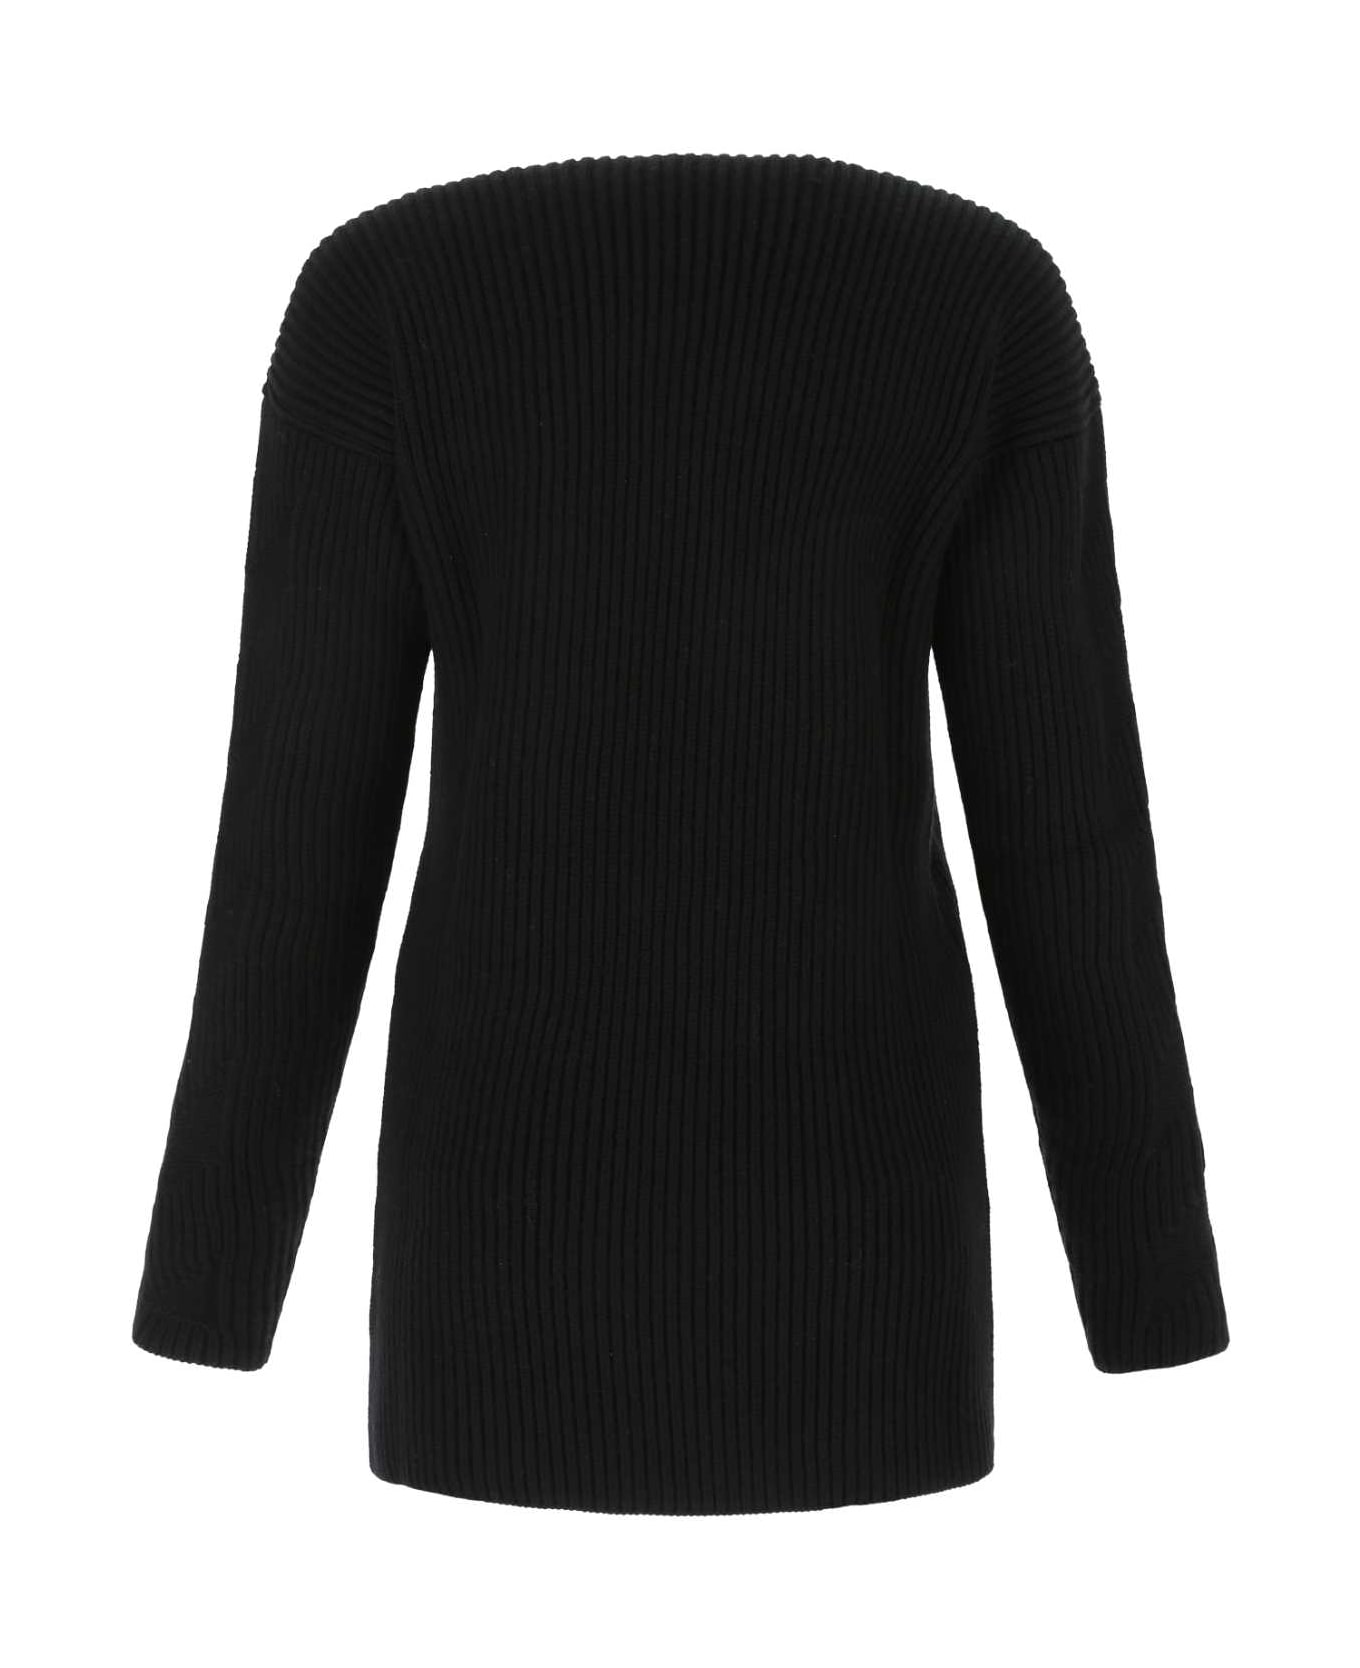 Off-White Black Wool Sweater - 1000